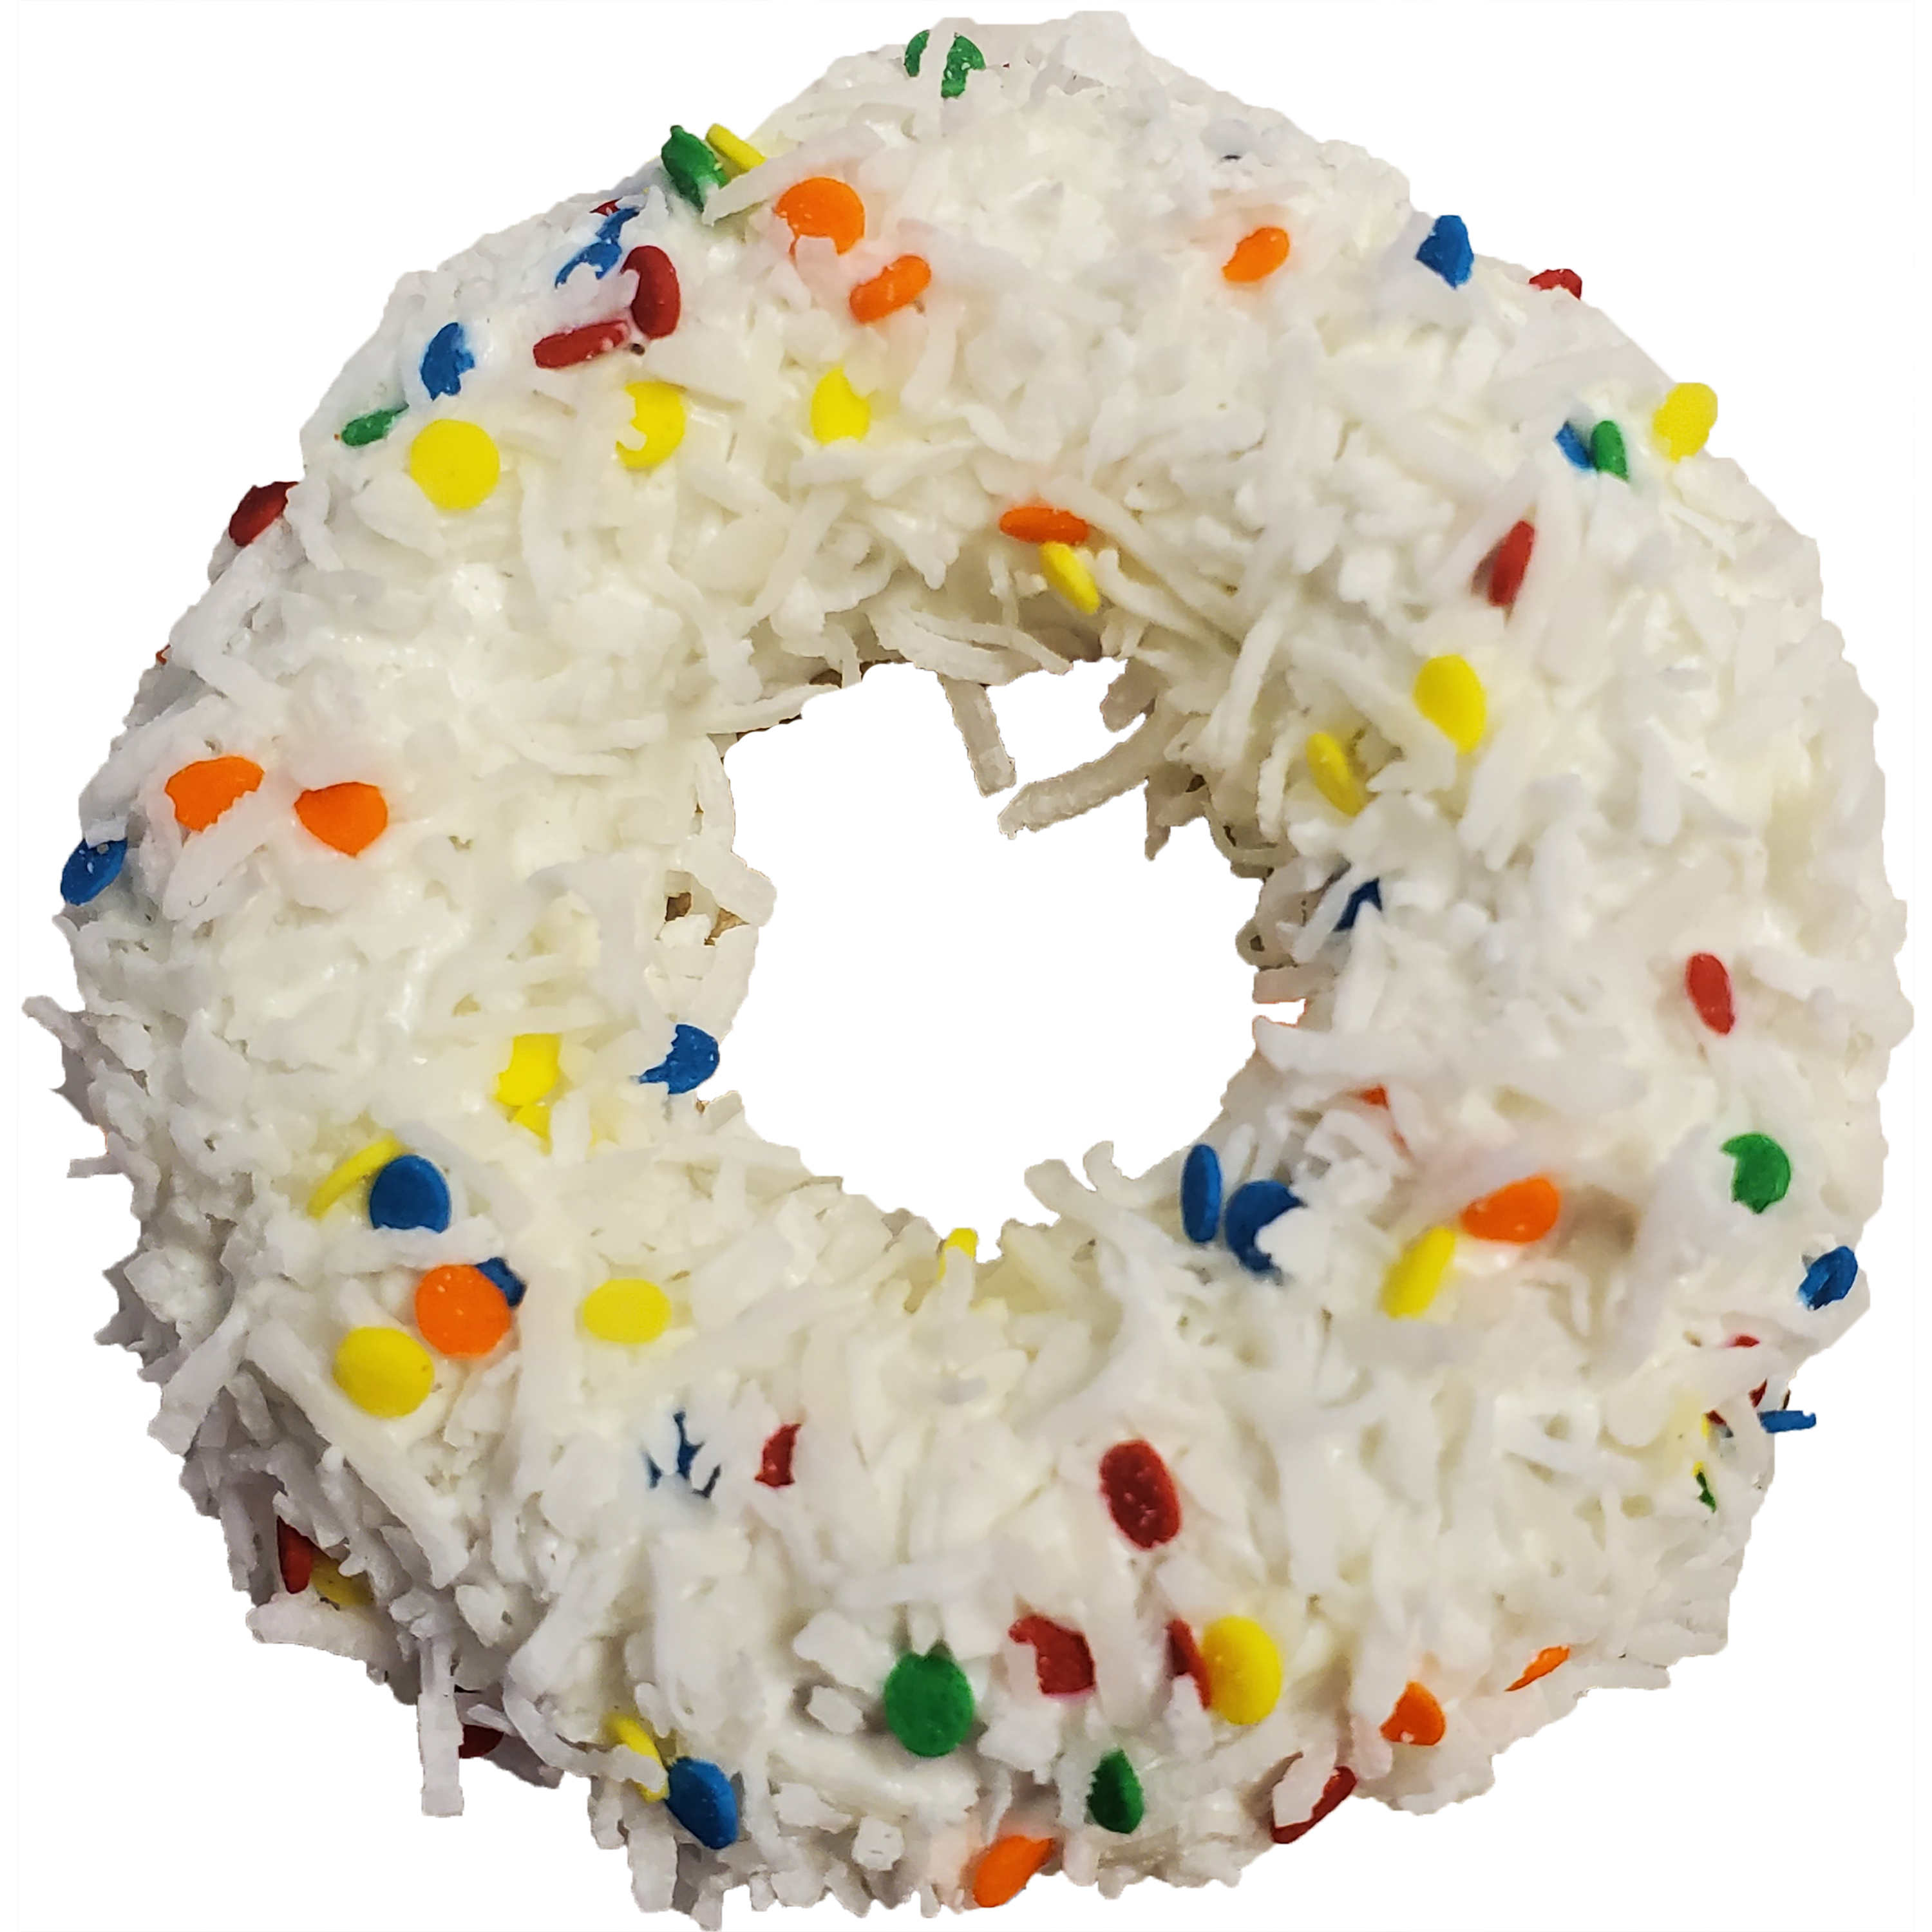 K9 Granola Factory Donut Shop Gourmet Donut For Dogs, Birthday Cake